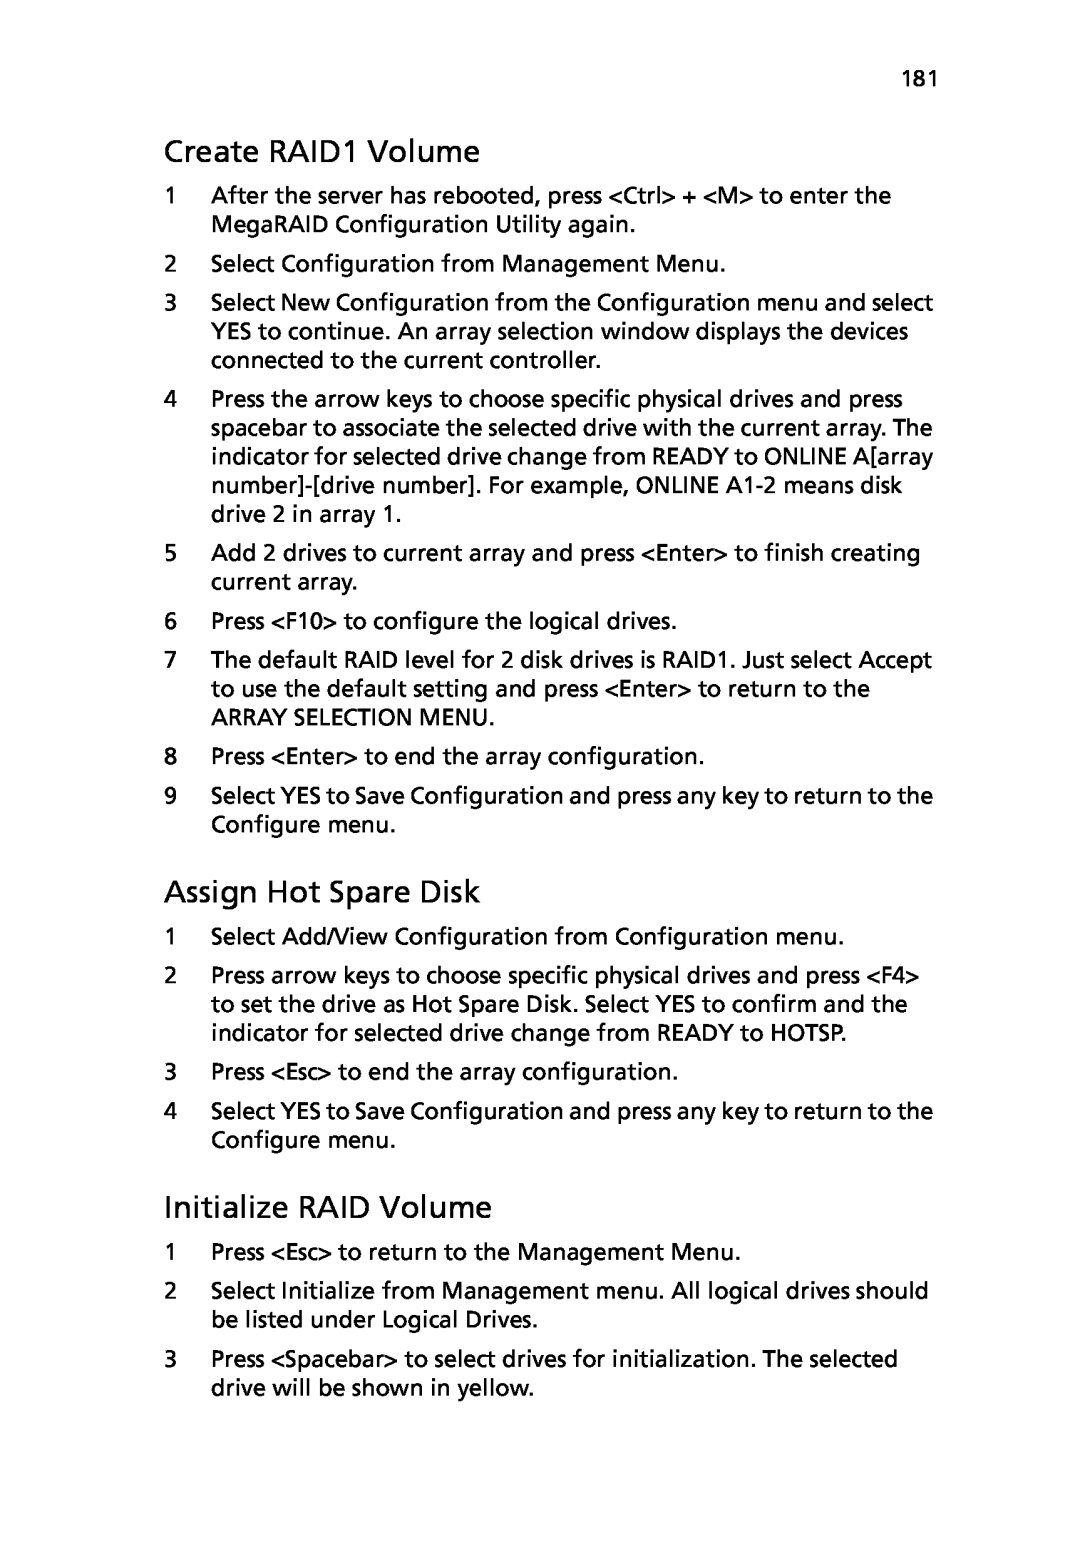 Acer Altos R710 manual Create RAID1 Volume, Assign Hot Spare Disk, Initialize RAID Volume 